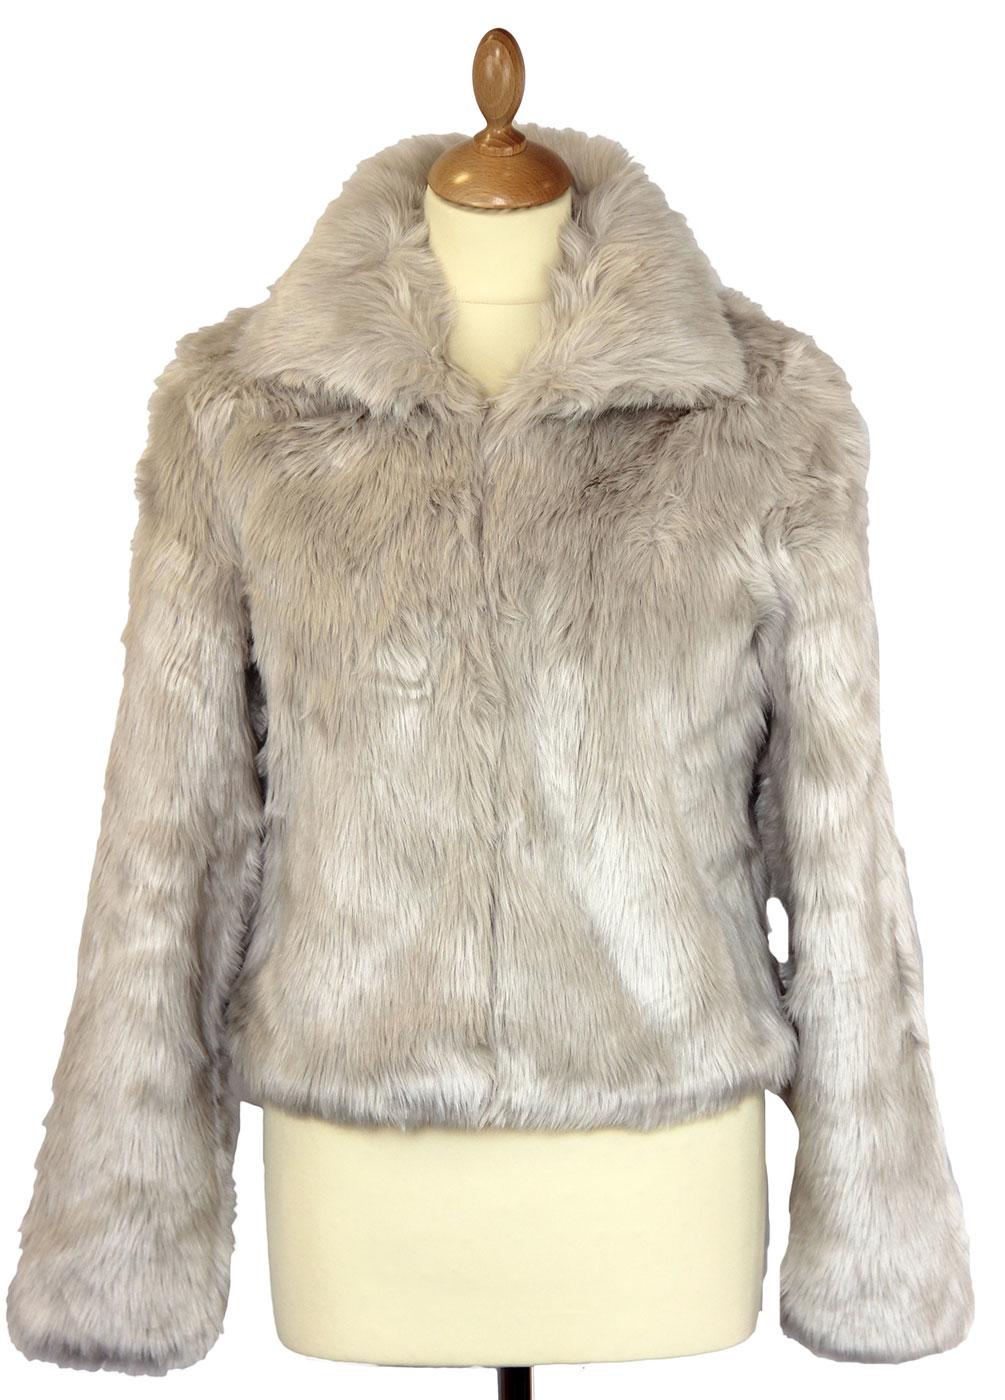 Dallas DESIGNER DUCHESS Retro 60s Faux Fur Jacket